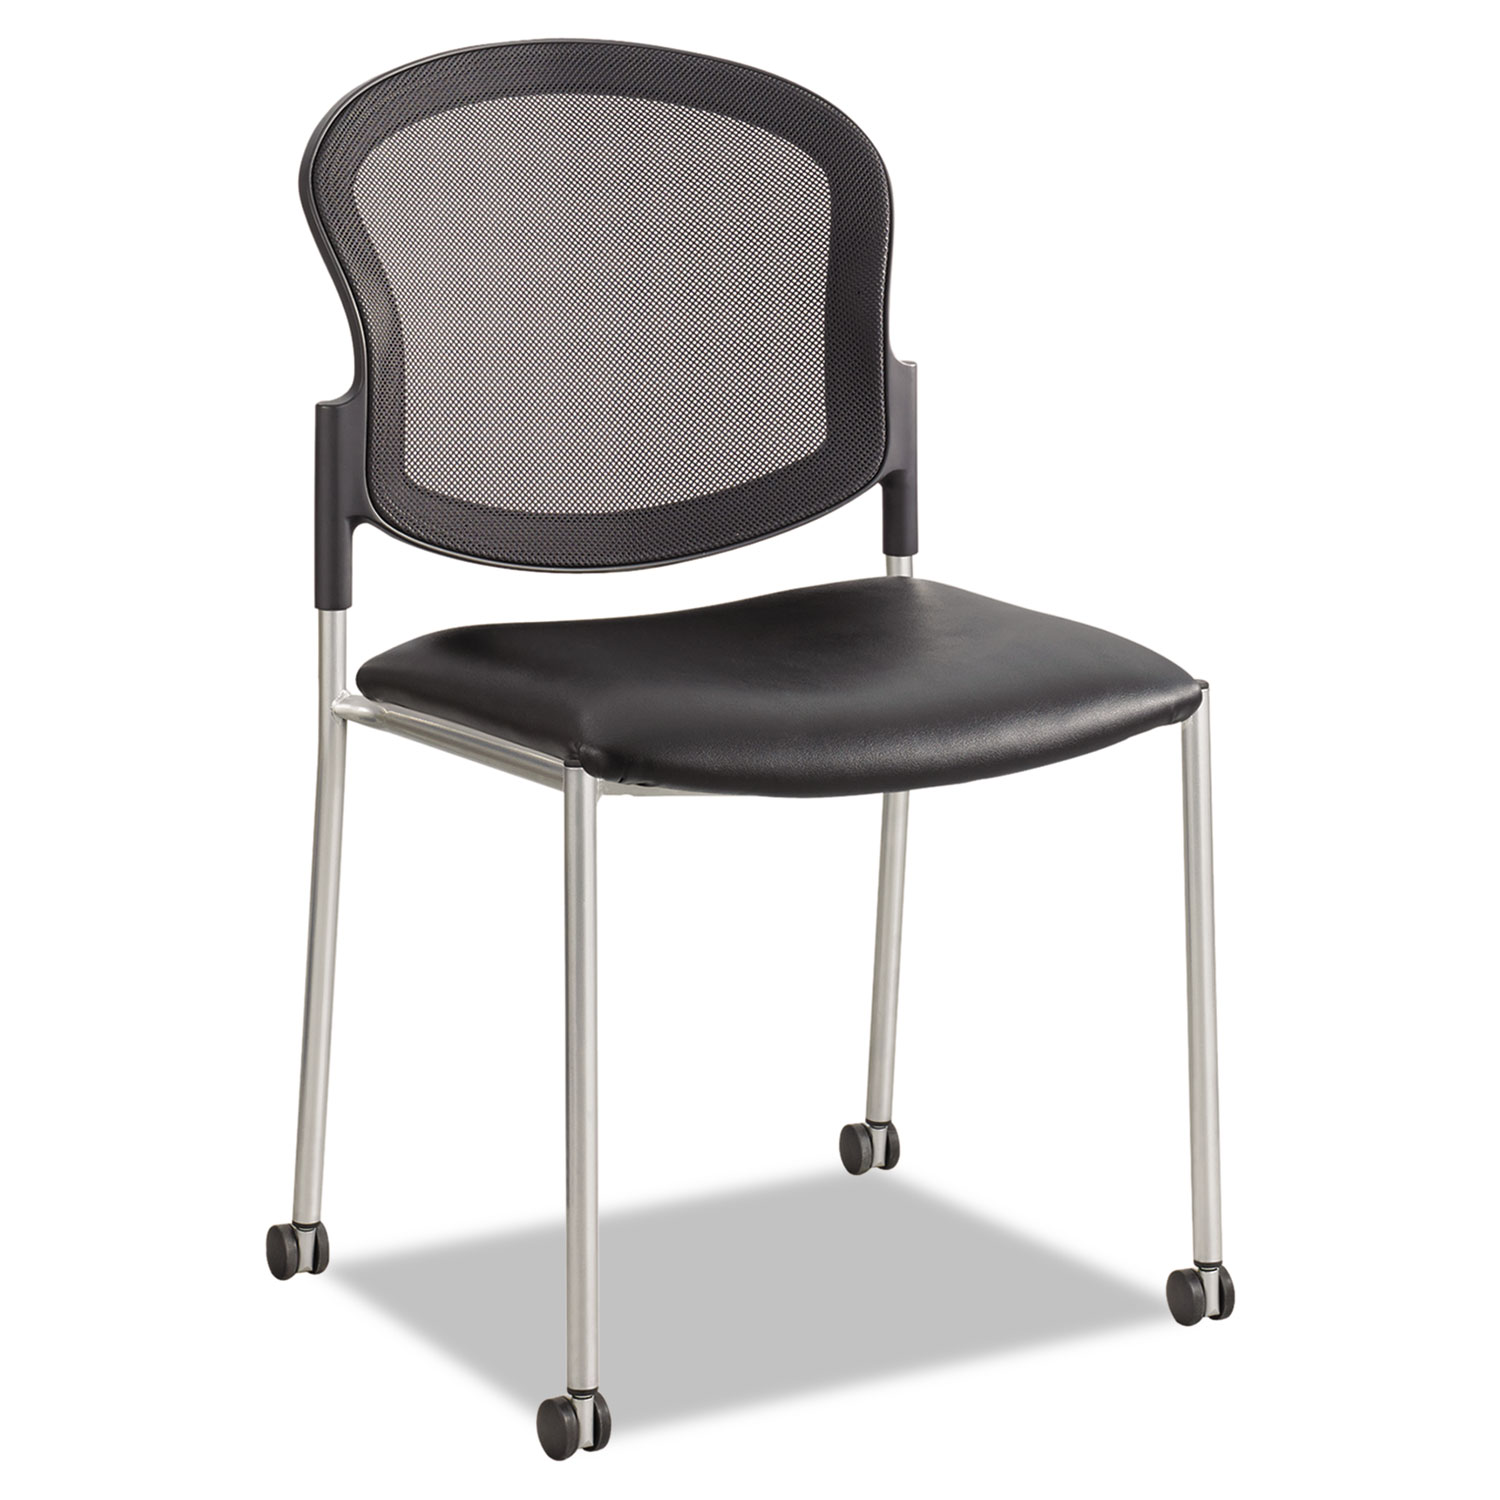  Safco 5009BV Diaz Guest Chair, 19.5 x 18.5 x 33.5, Black Seat/Black Back, Silver Base (SAF5009BV) 